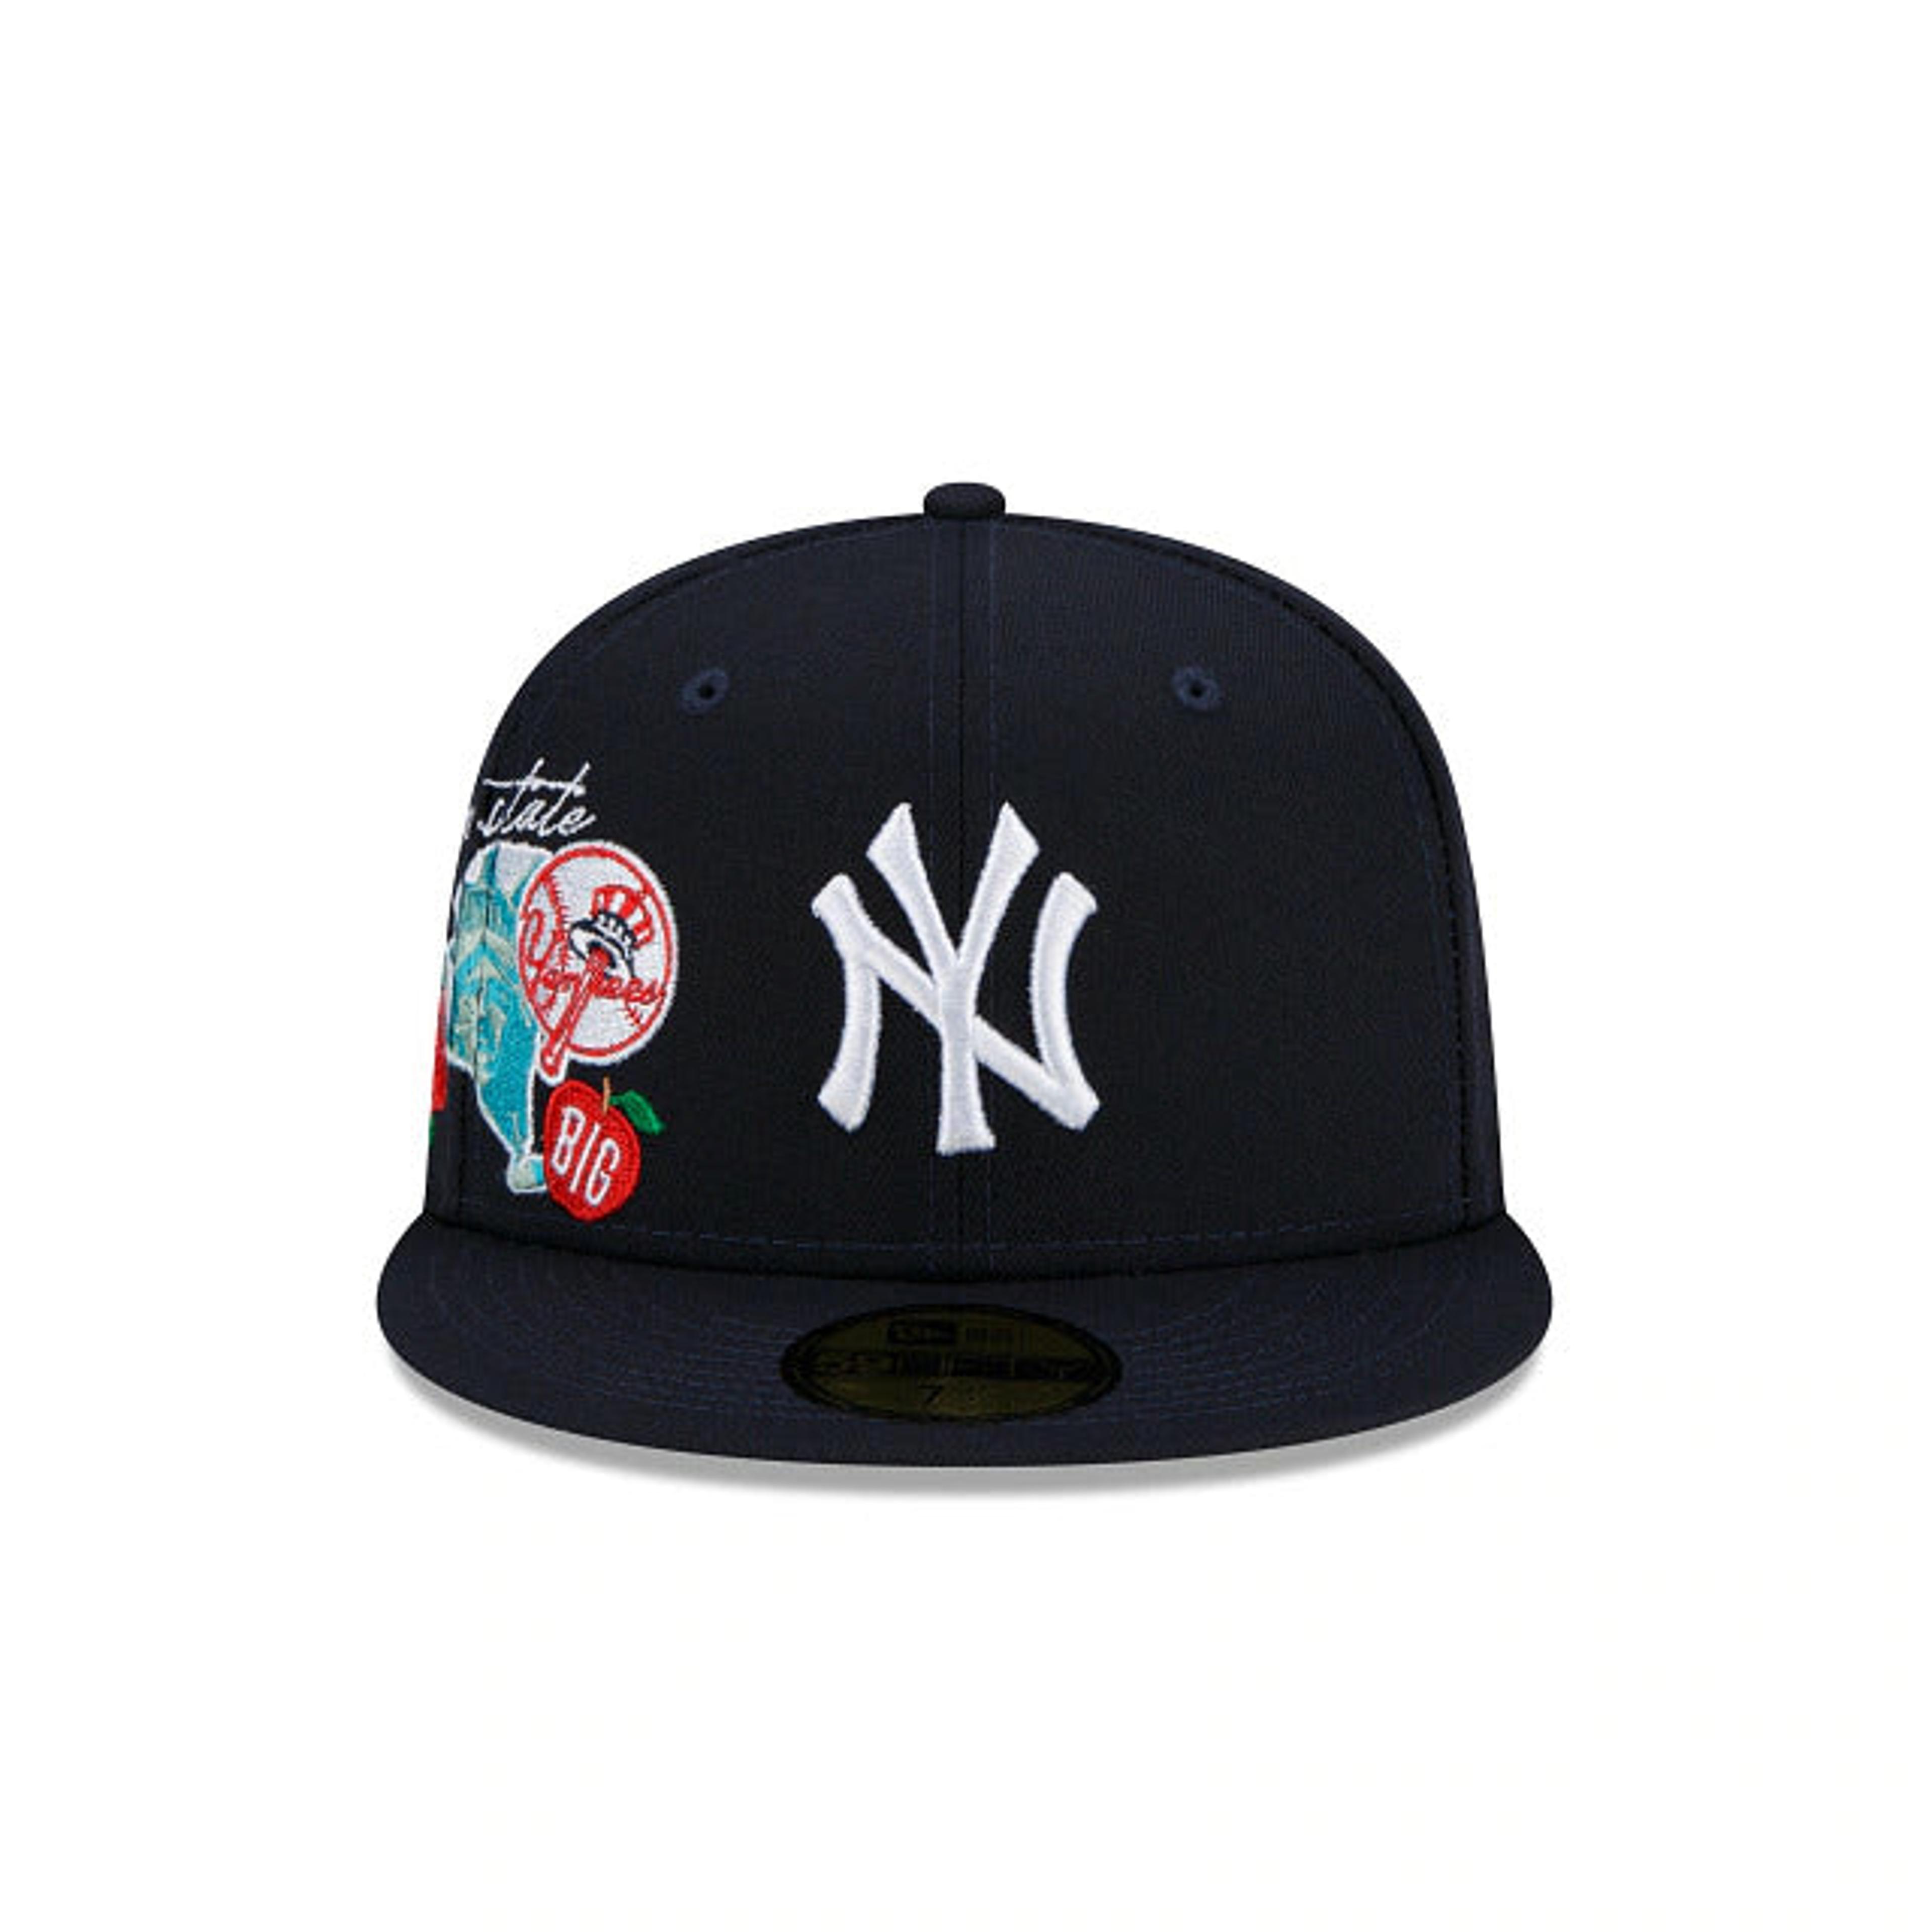 MLB New York Yankees Embroidered Baby Tee